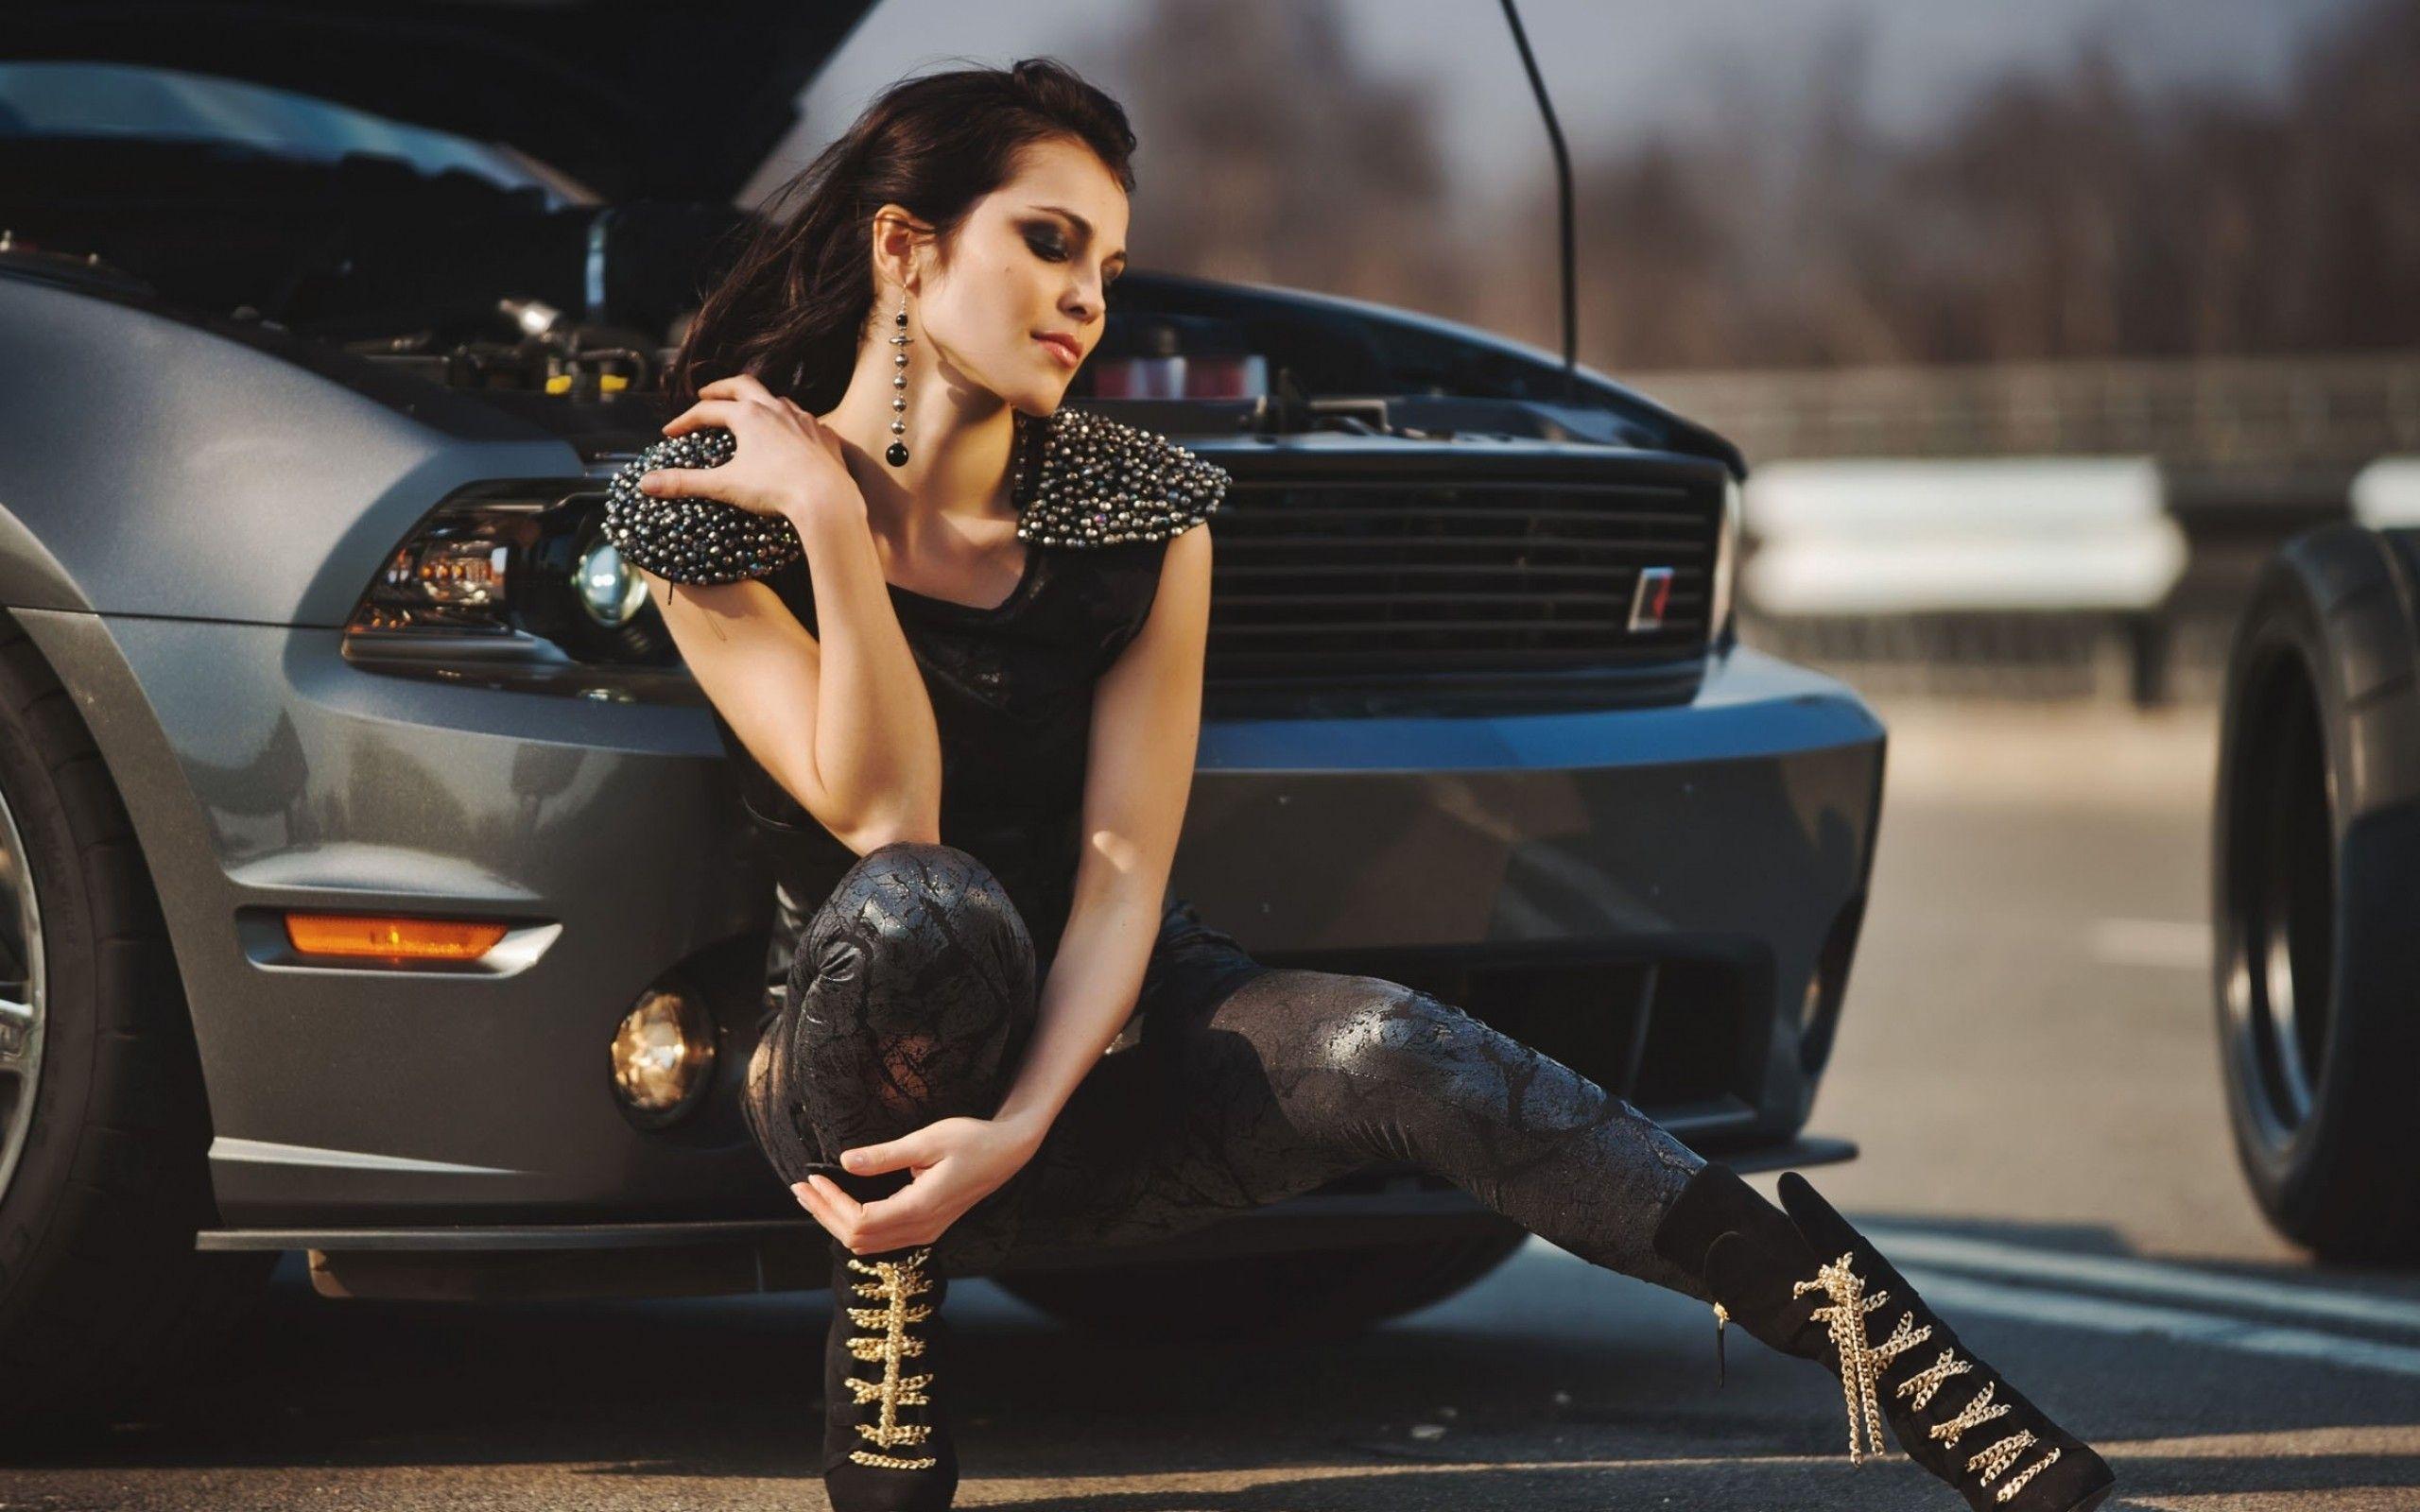 Ford Mustang, #Sati Kazanova, #women with cars, #model, #women